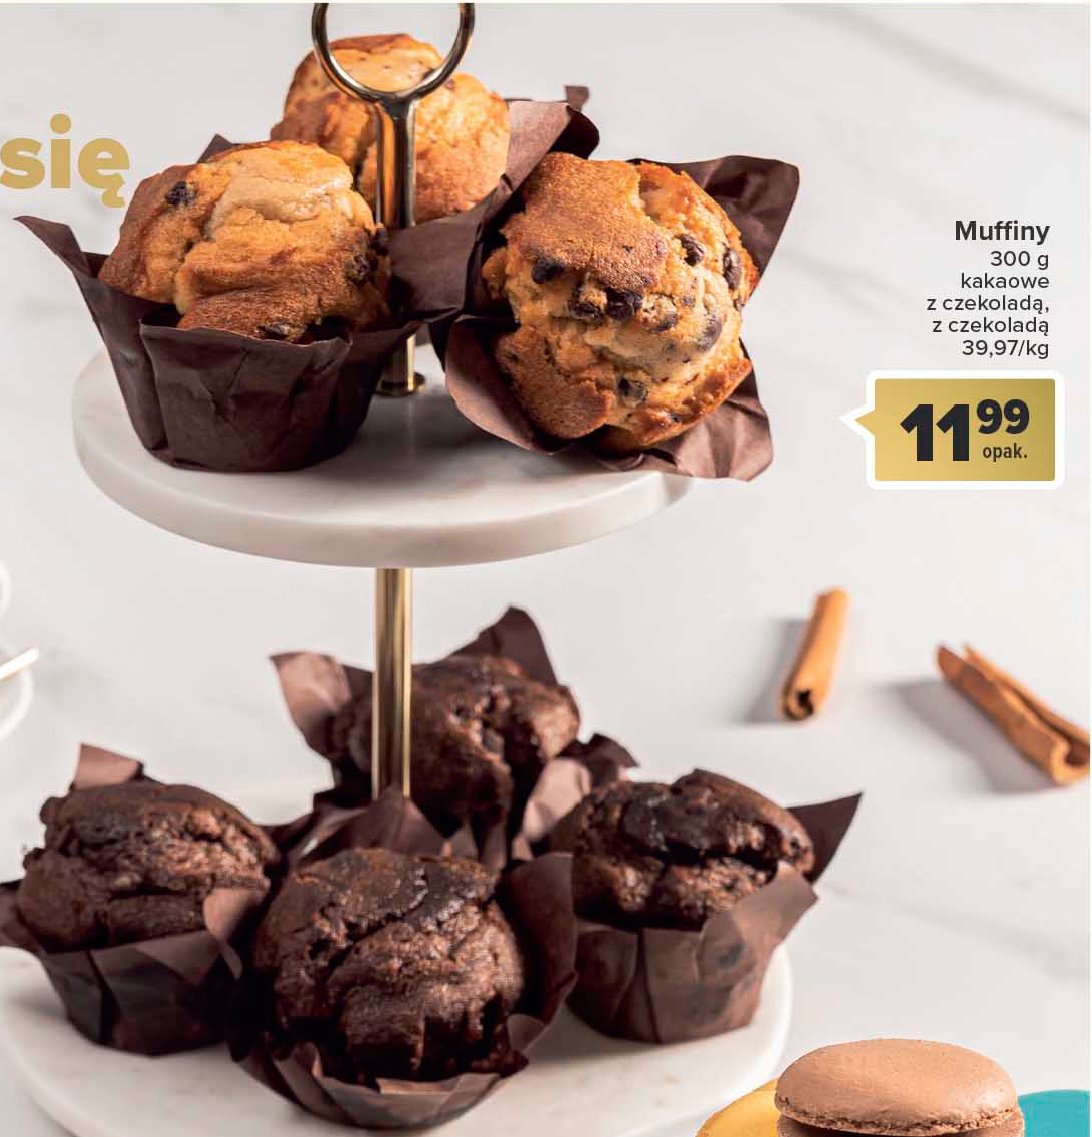 Muffin z czekoladą promocja